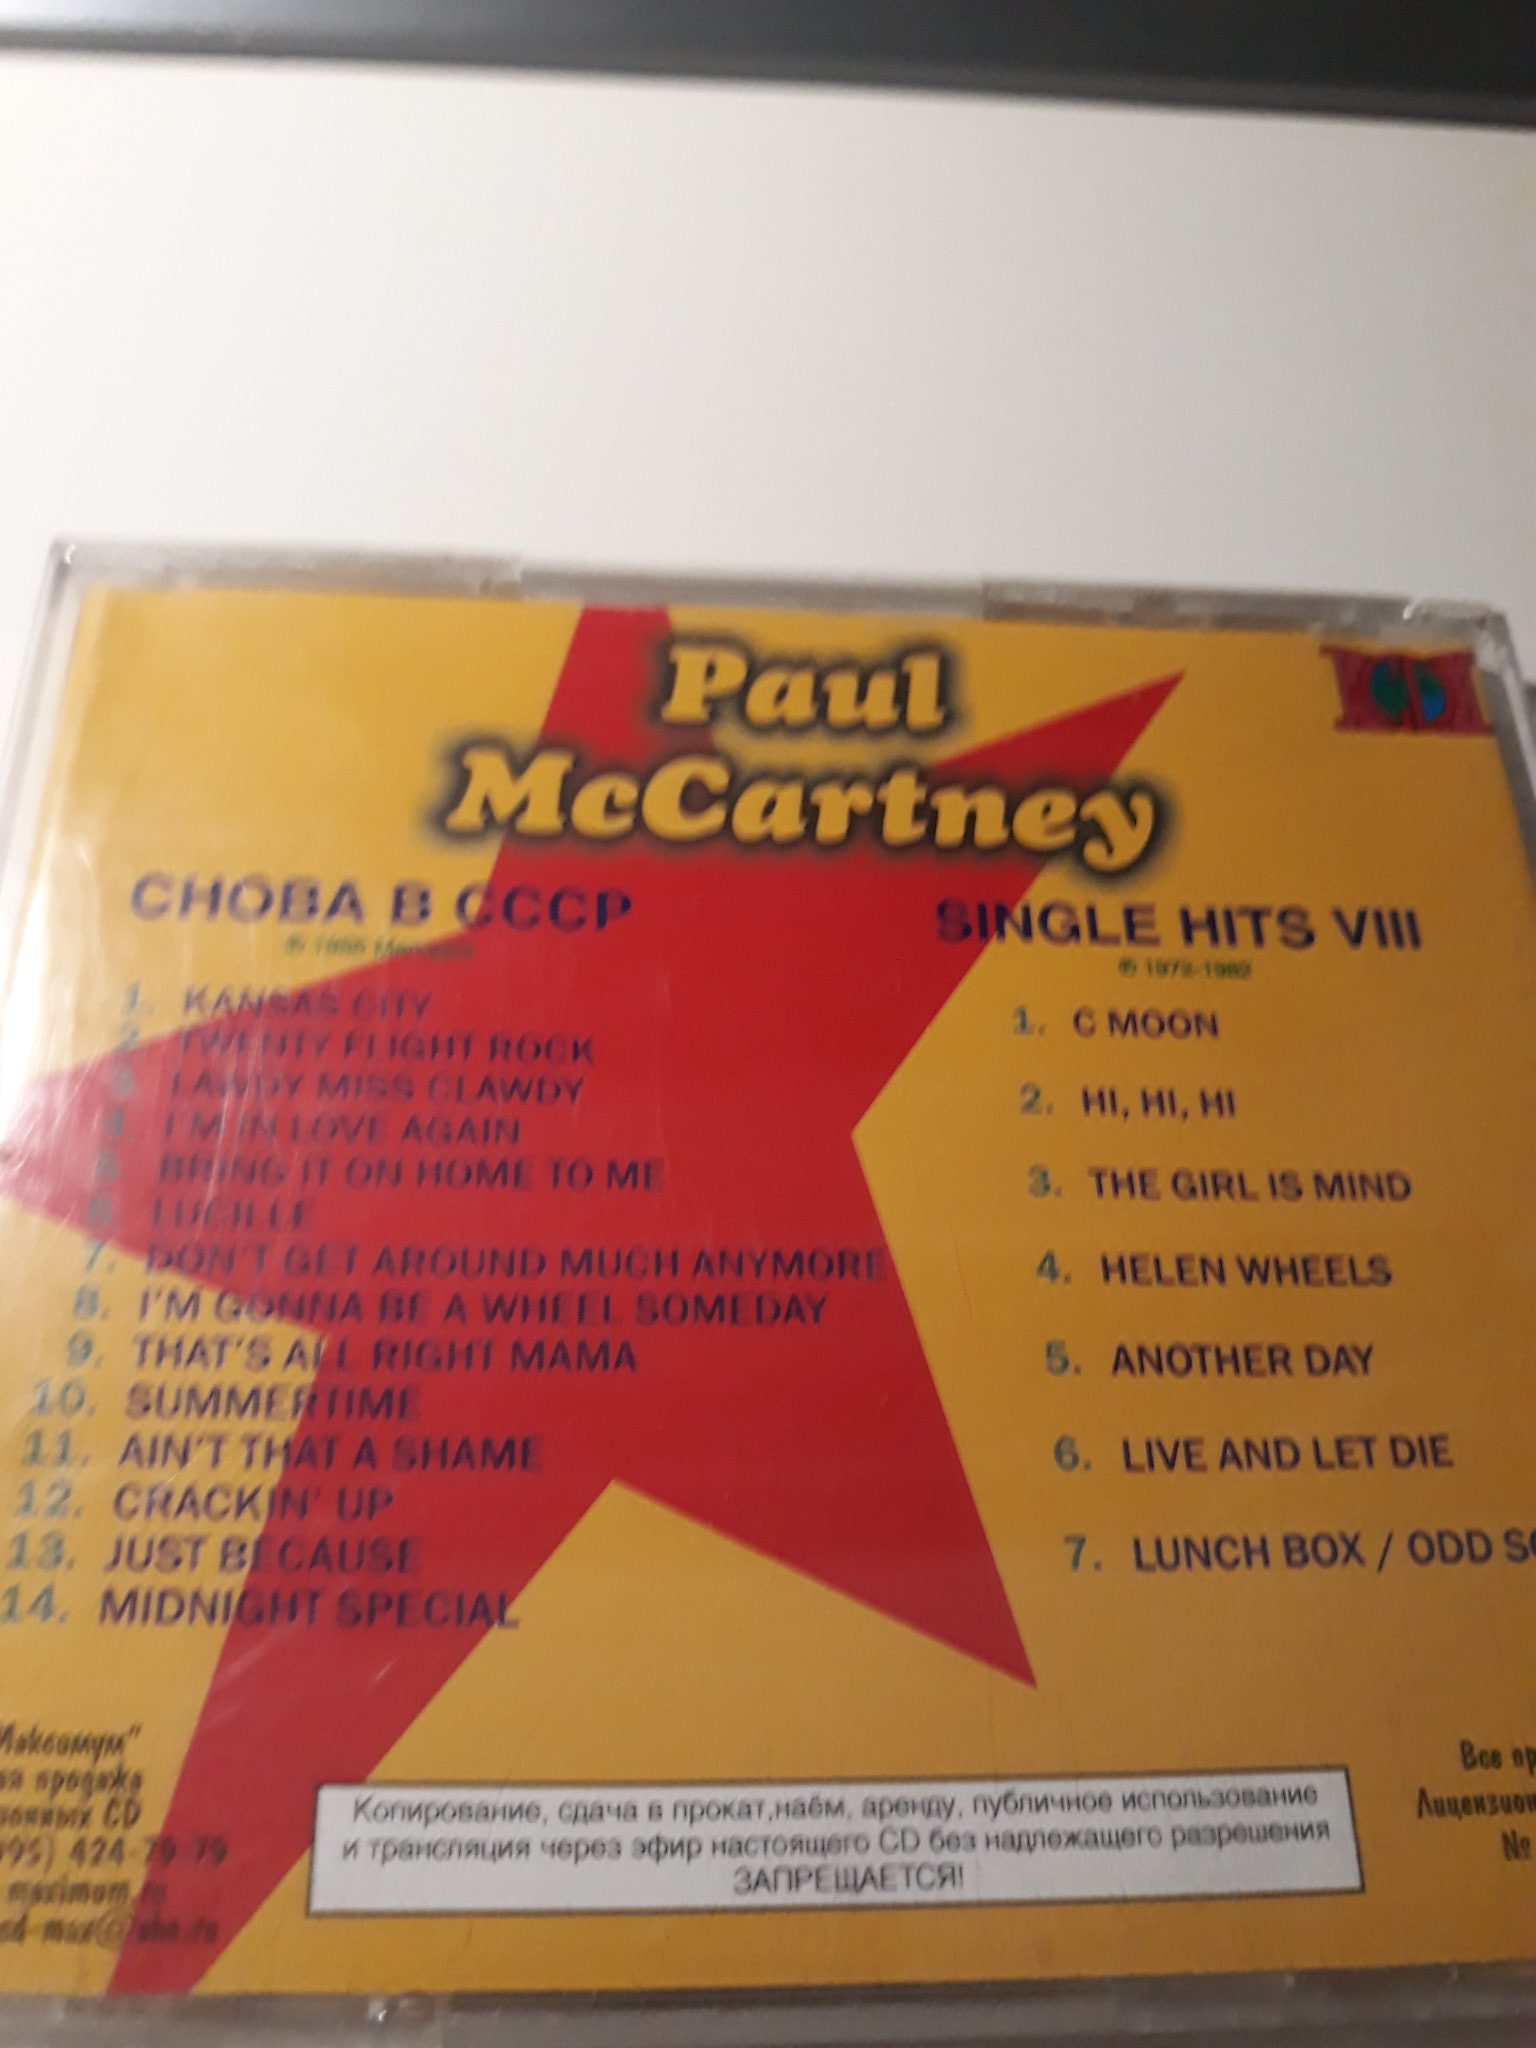 Paul McCartney - Choba B CCCP / Single Hits VIII duopack –